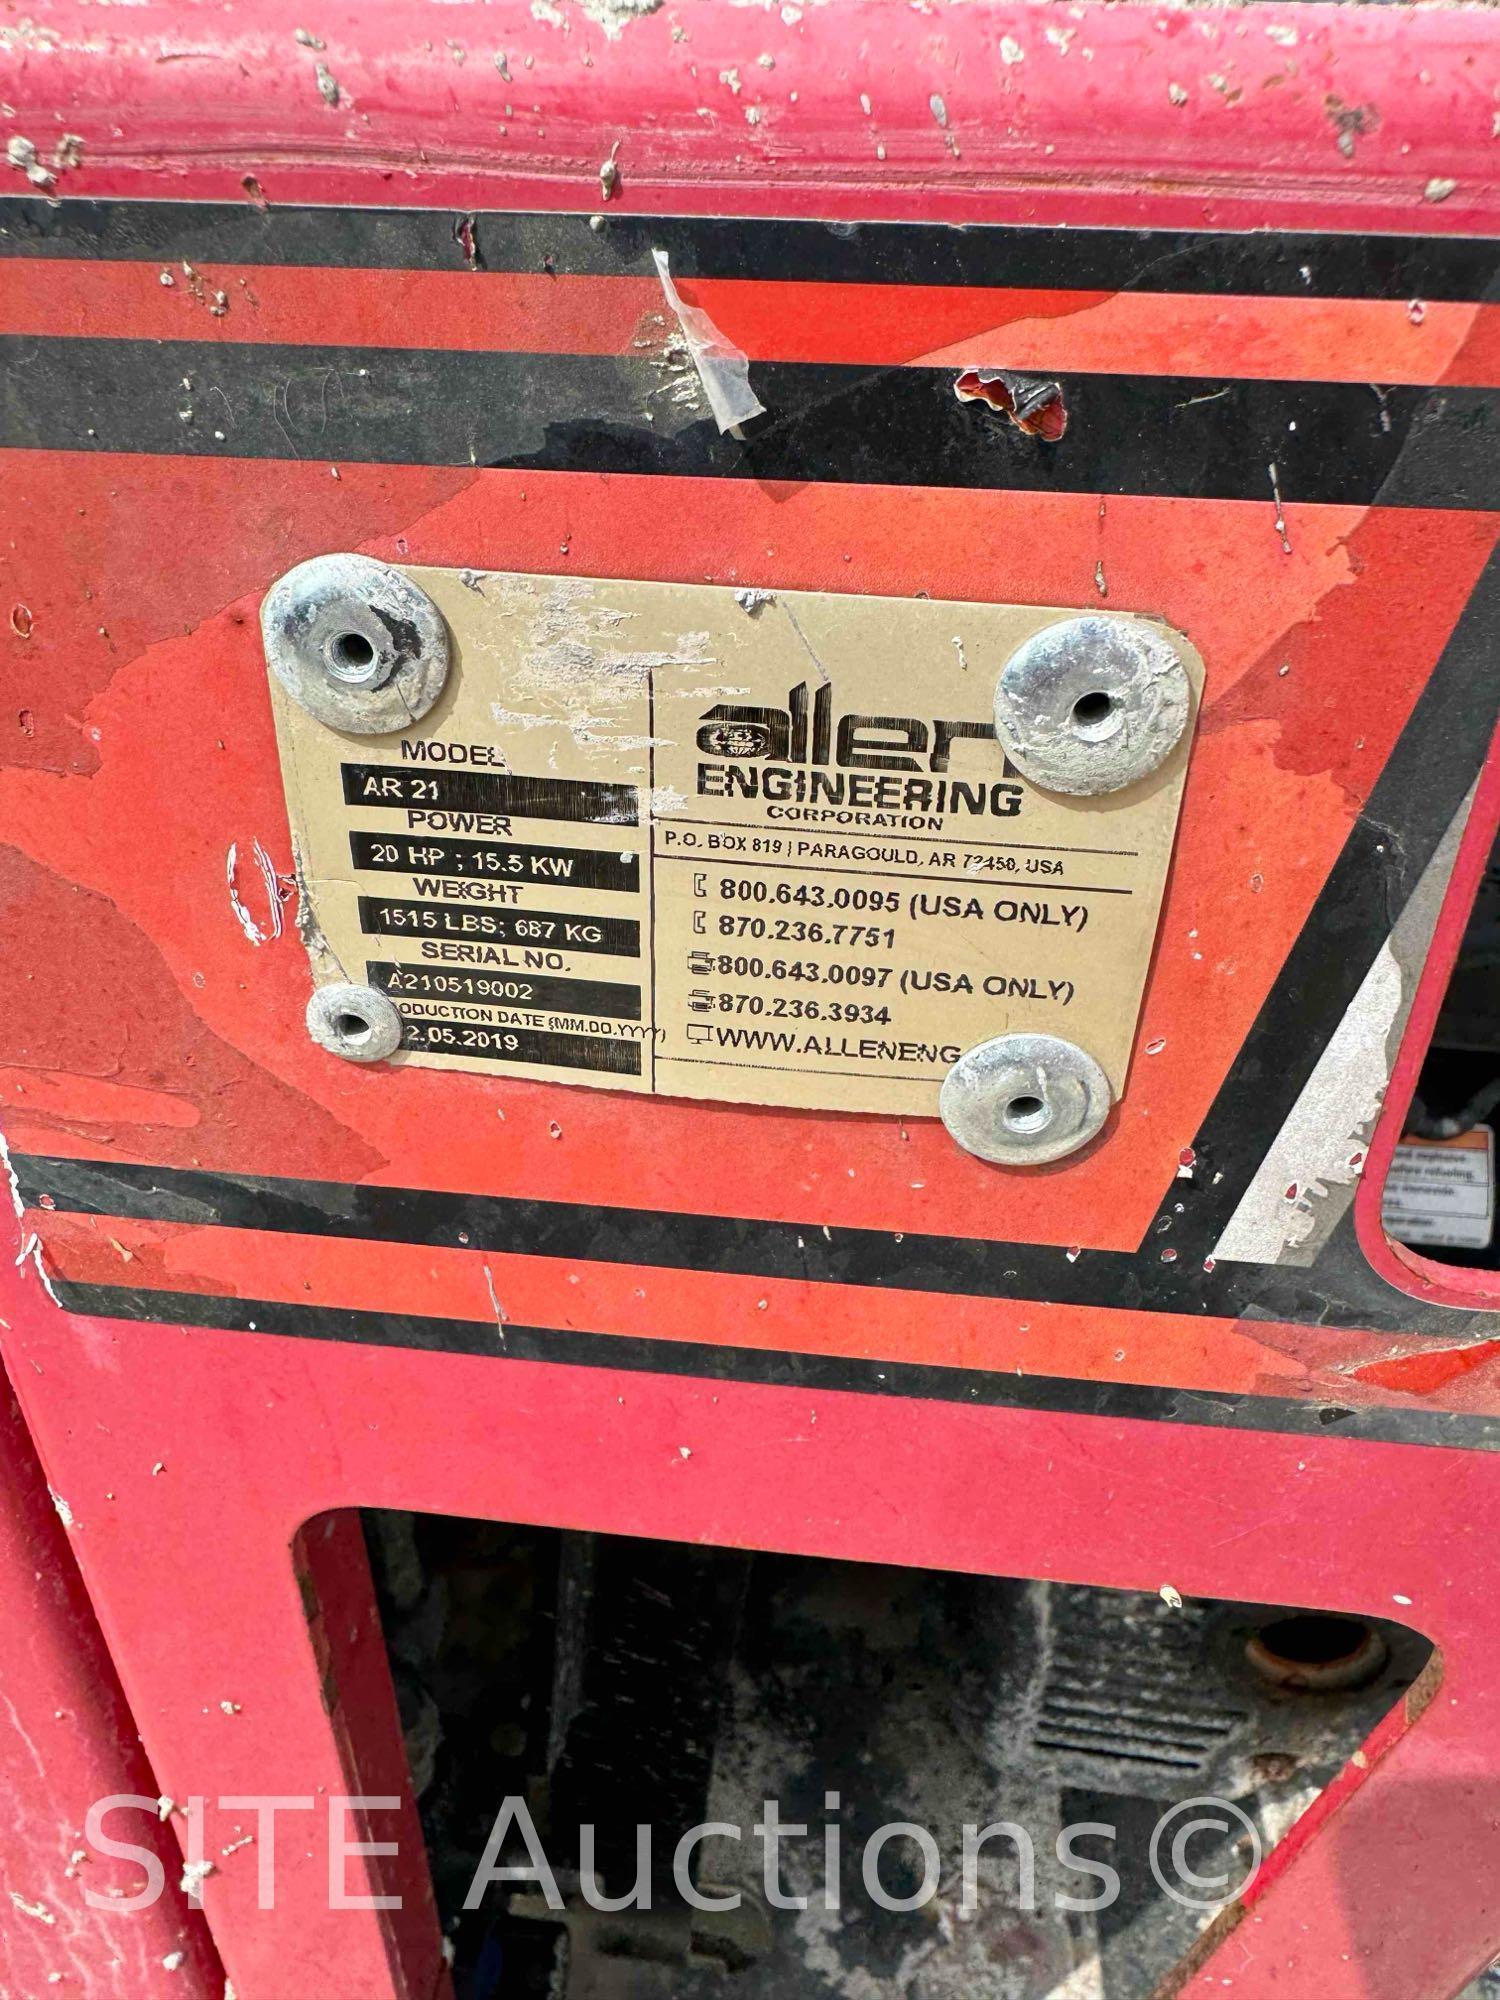 2019 Allen AR21 Concrete Buggy